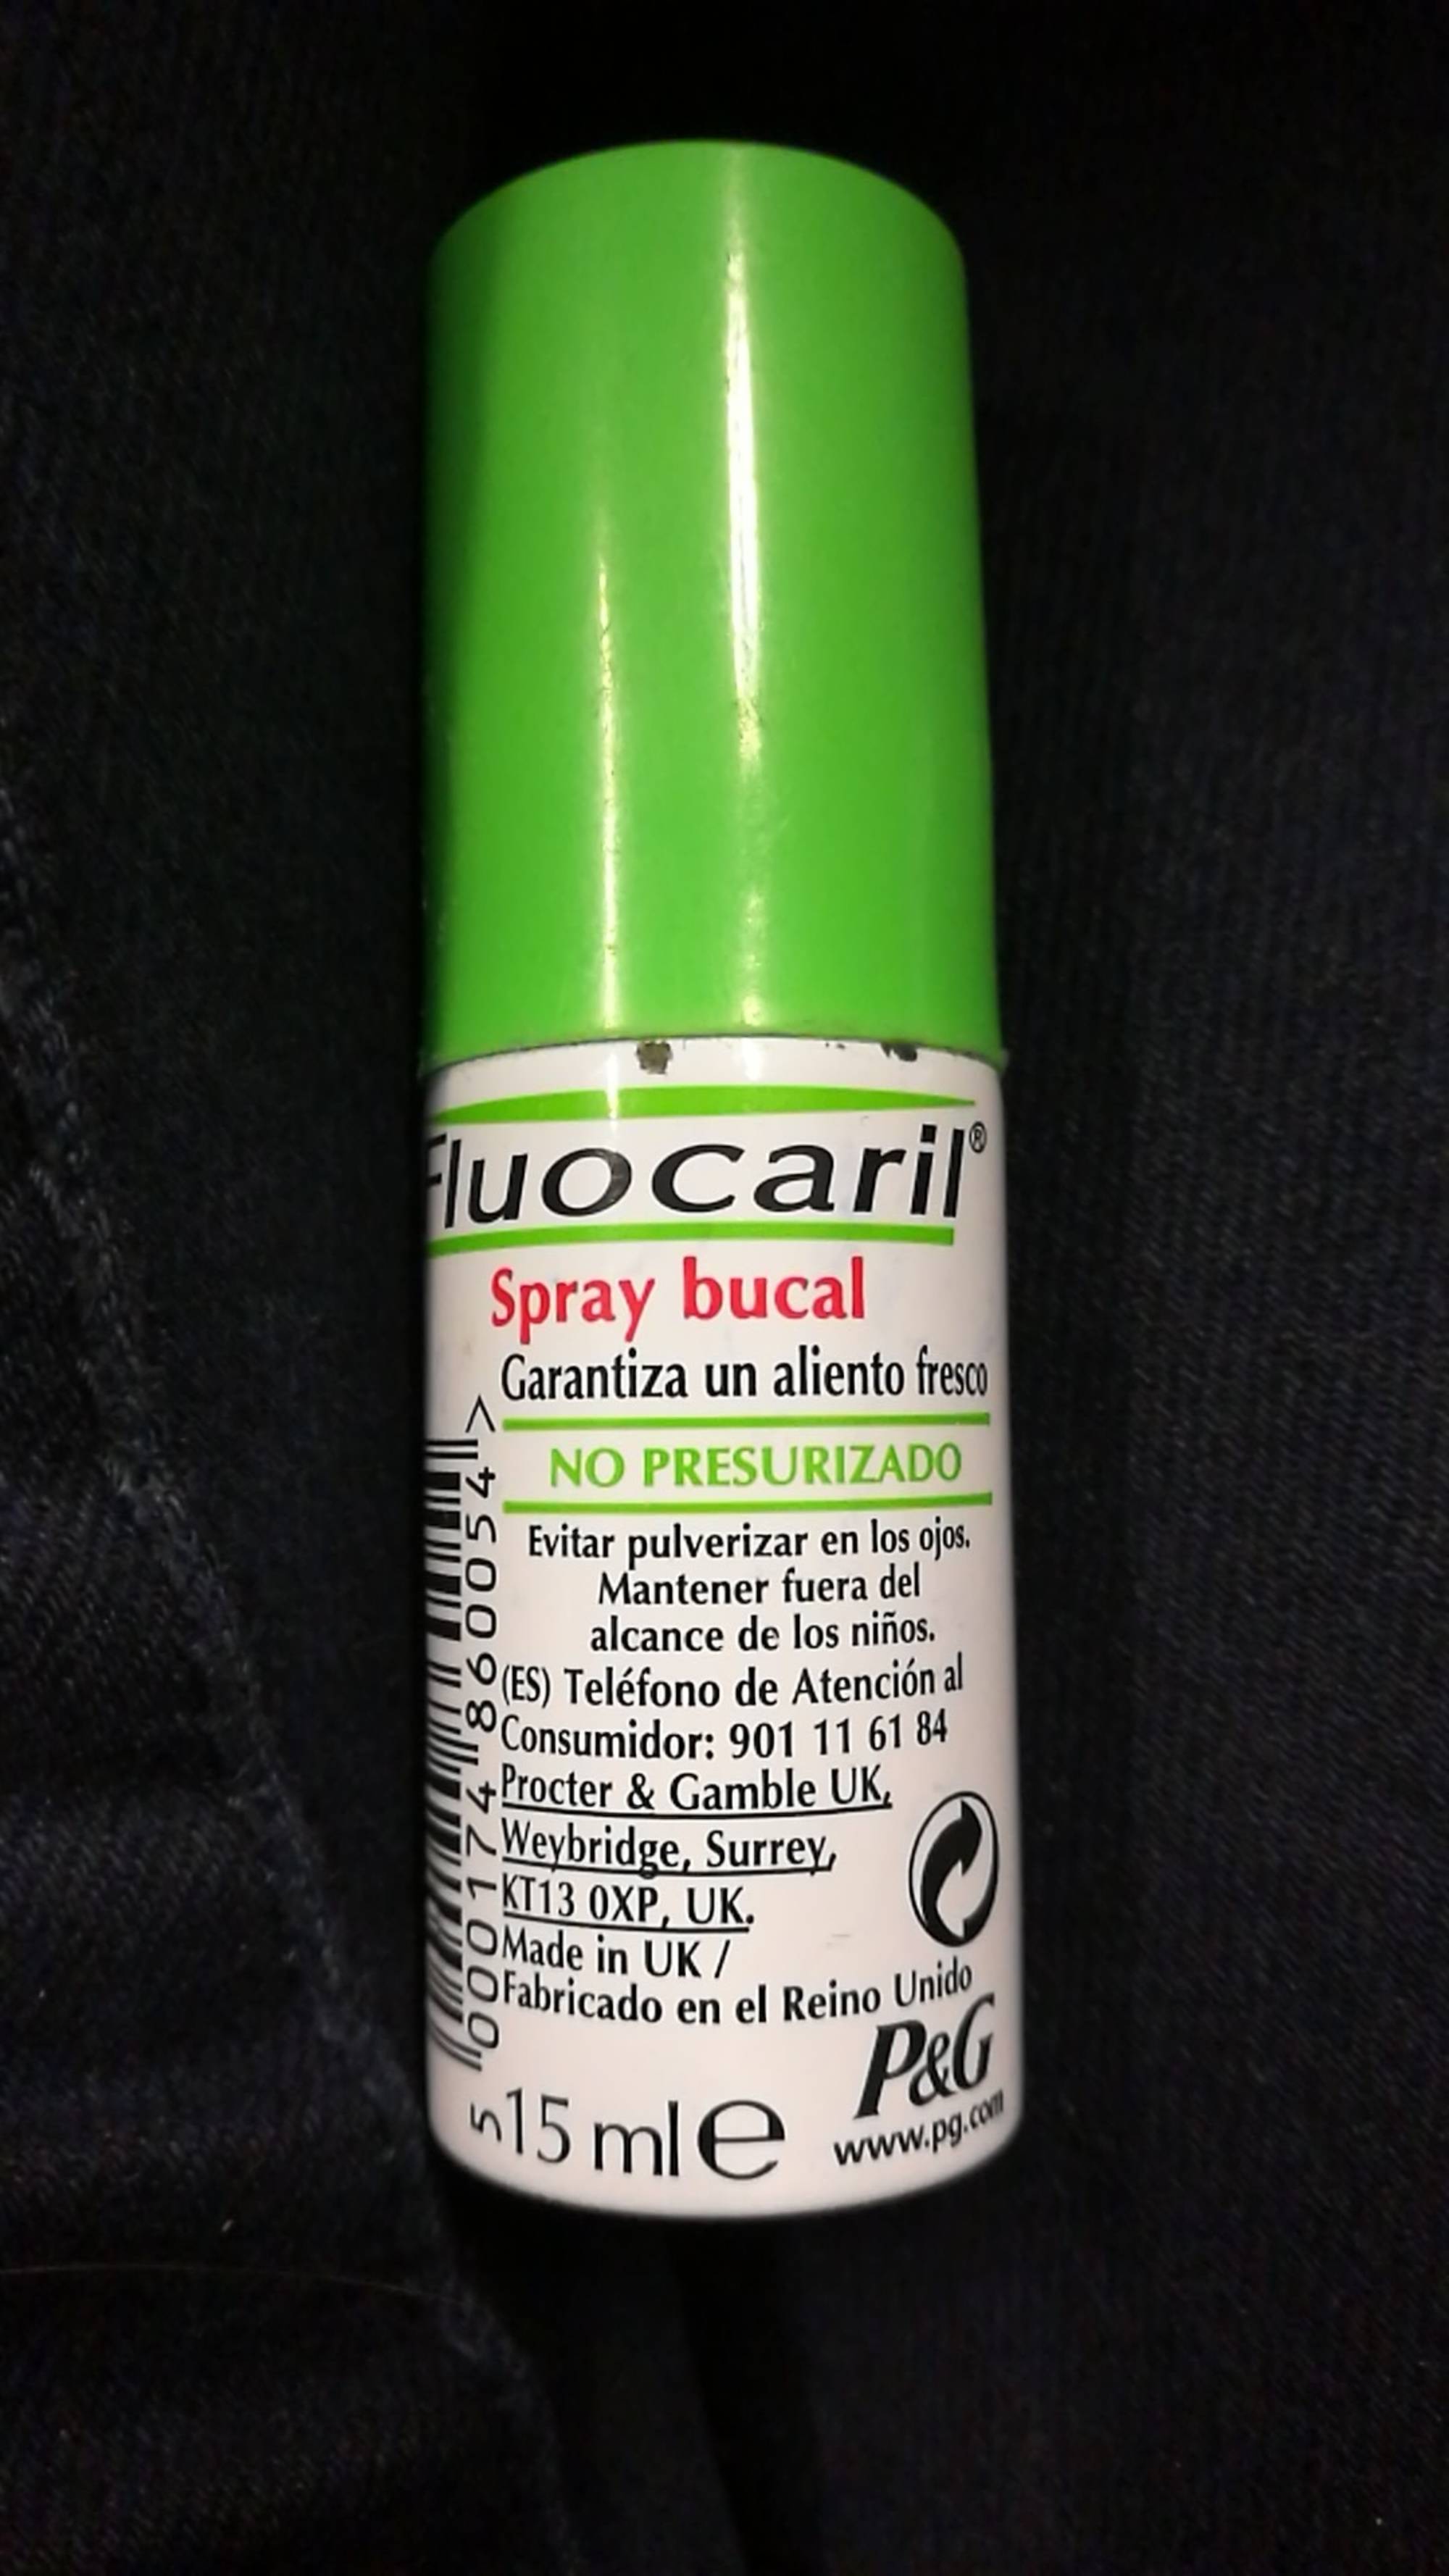 FLUOCARIL - Spray buccal rafraîchit l'haleine